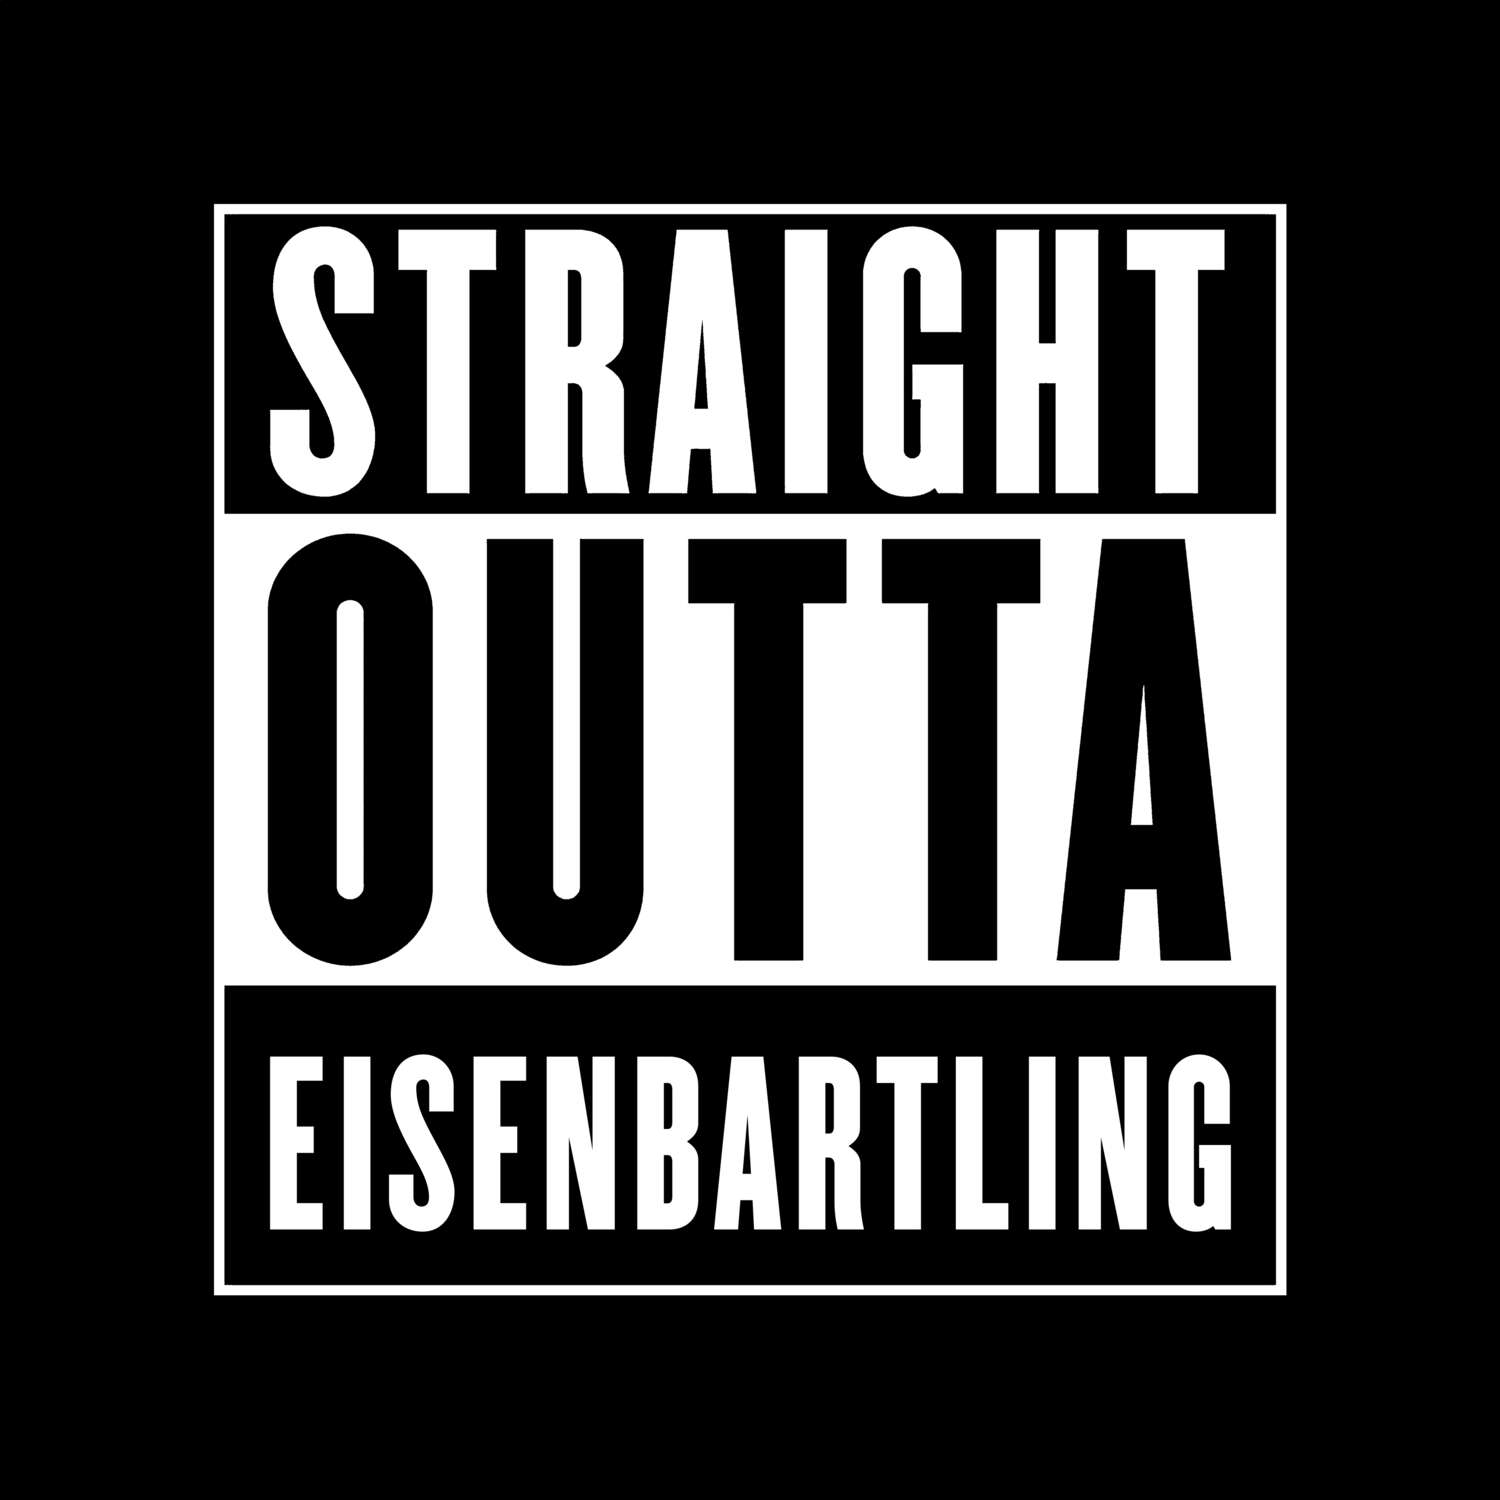 Eisenbartling T-Shirt »Straight Outta«